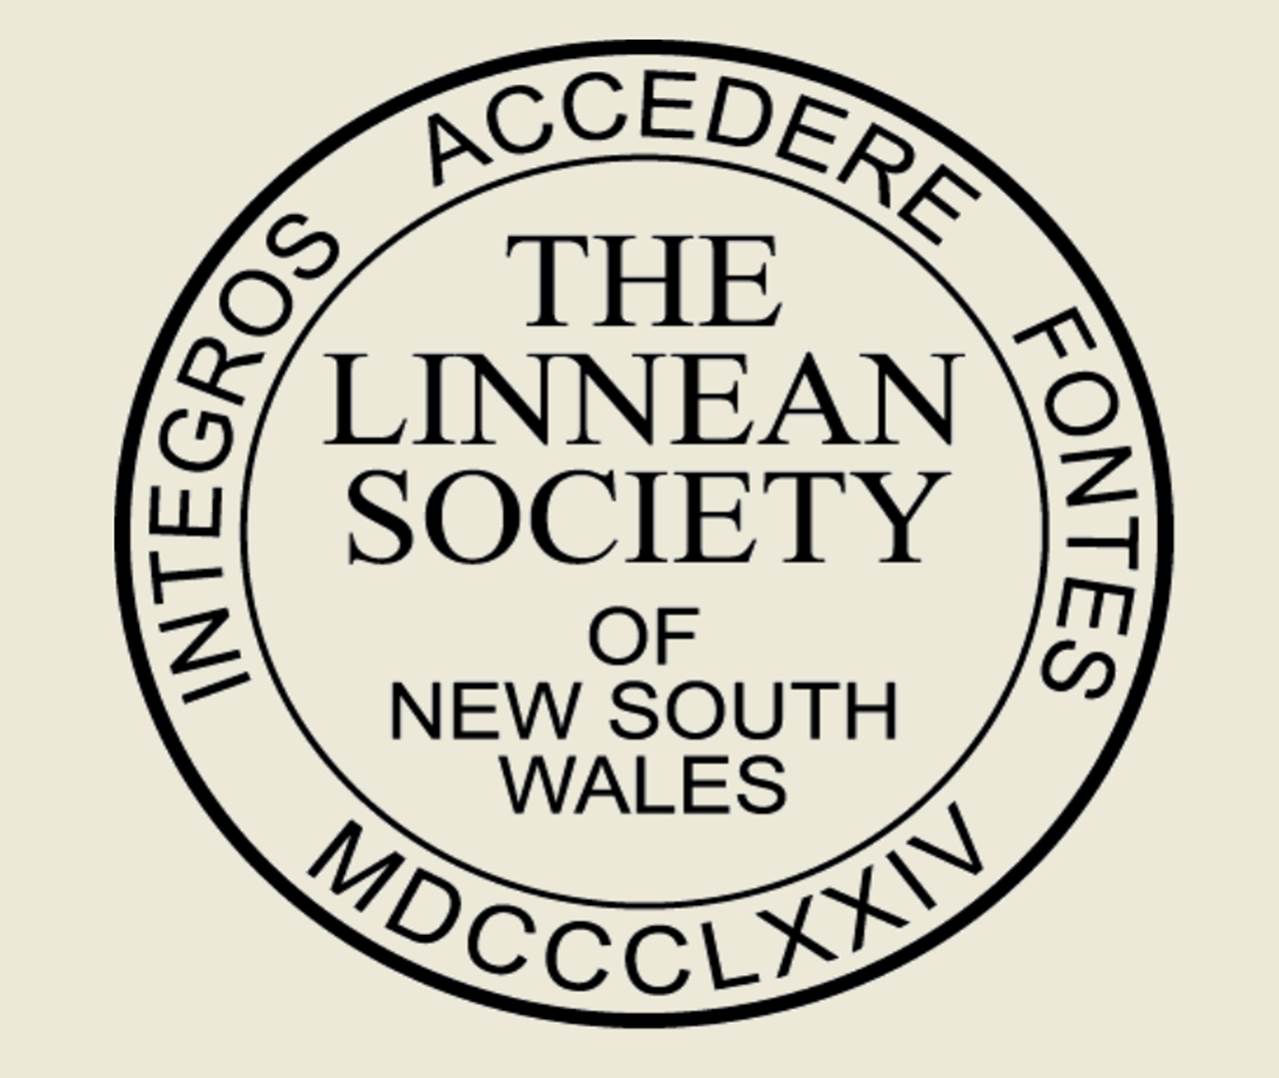 Linnean Society